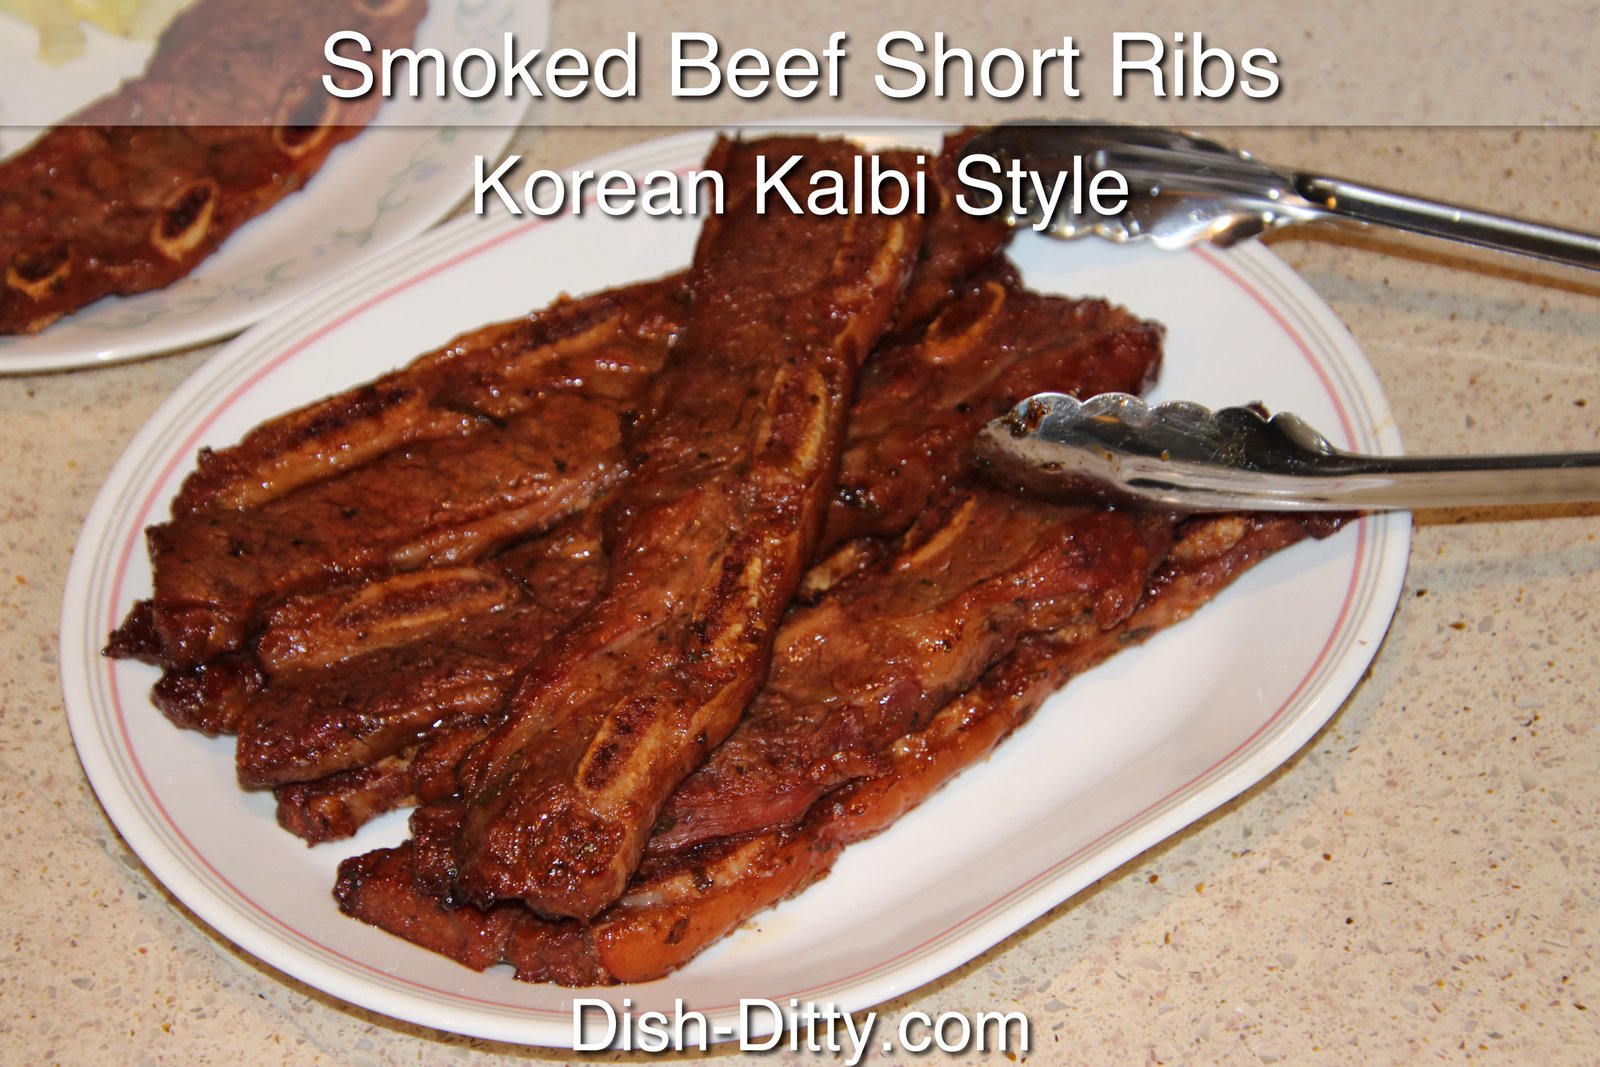 Smoked Beef Short Ribs Recipe by Dish Ditty Recipes